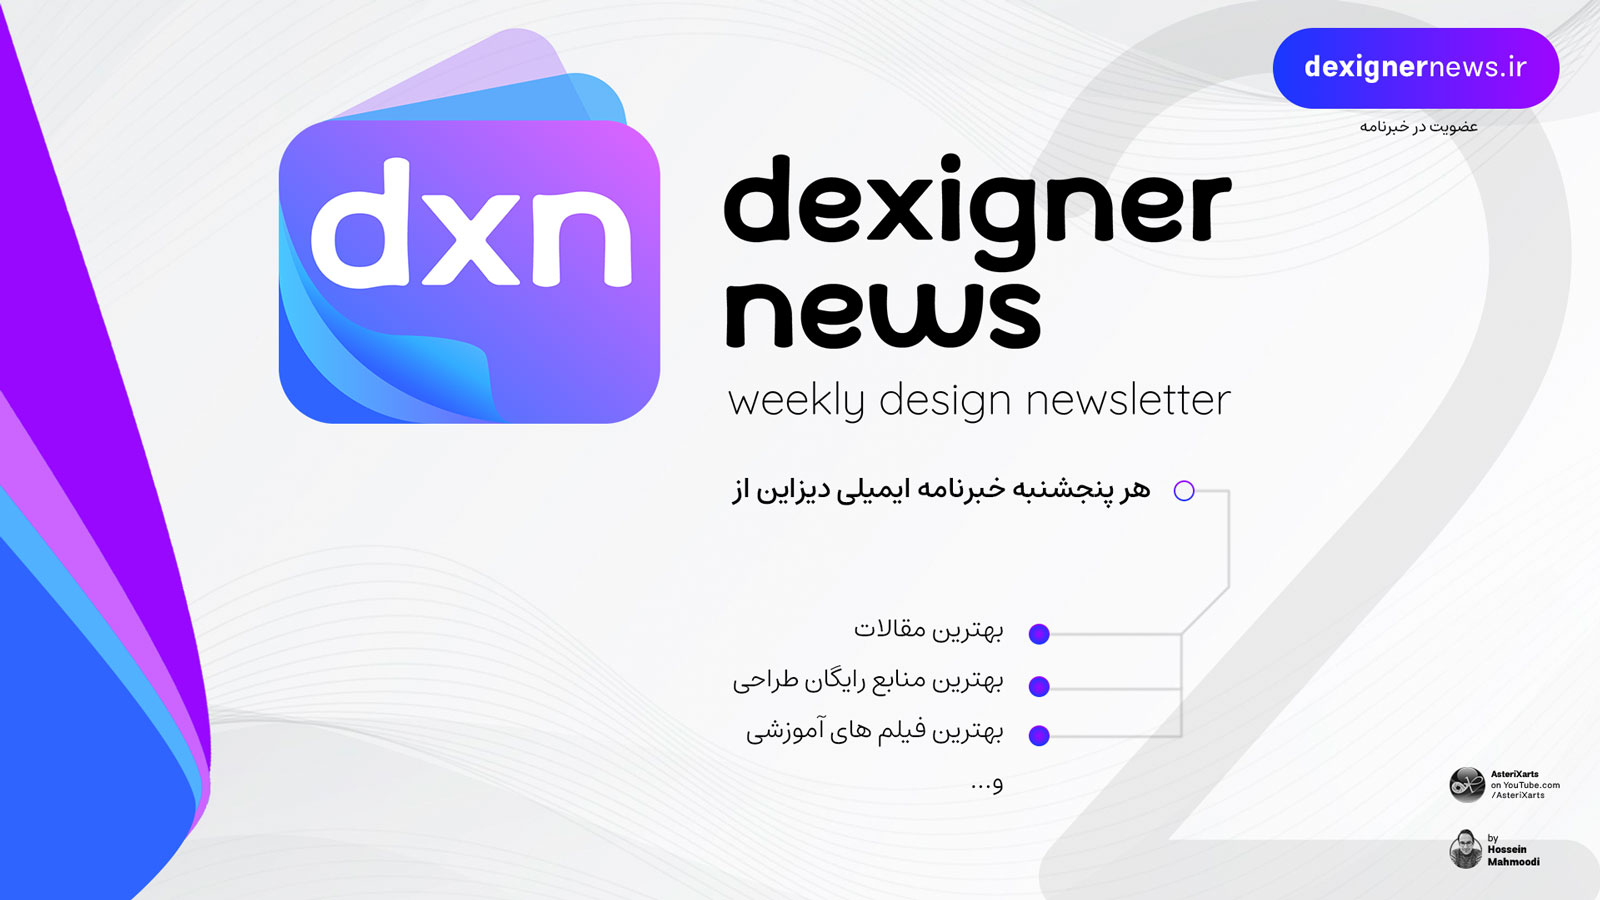 Dexigner News - خبرنامه هفتگی دیزاین - شماره 10